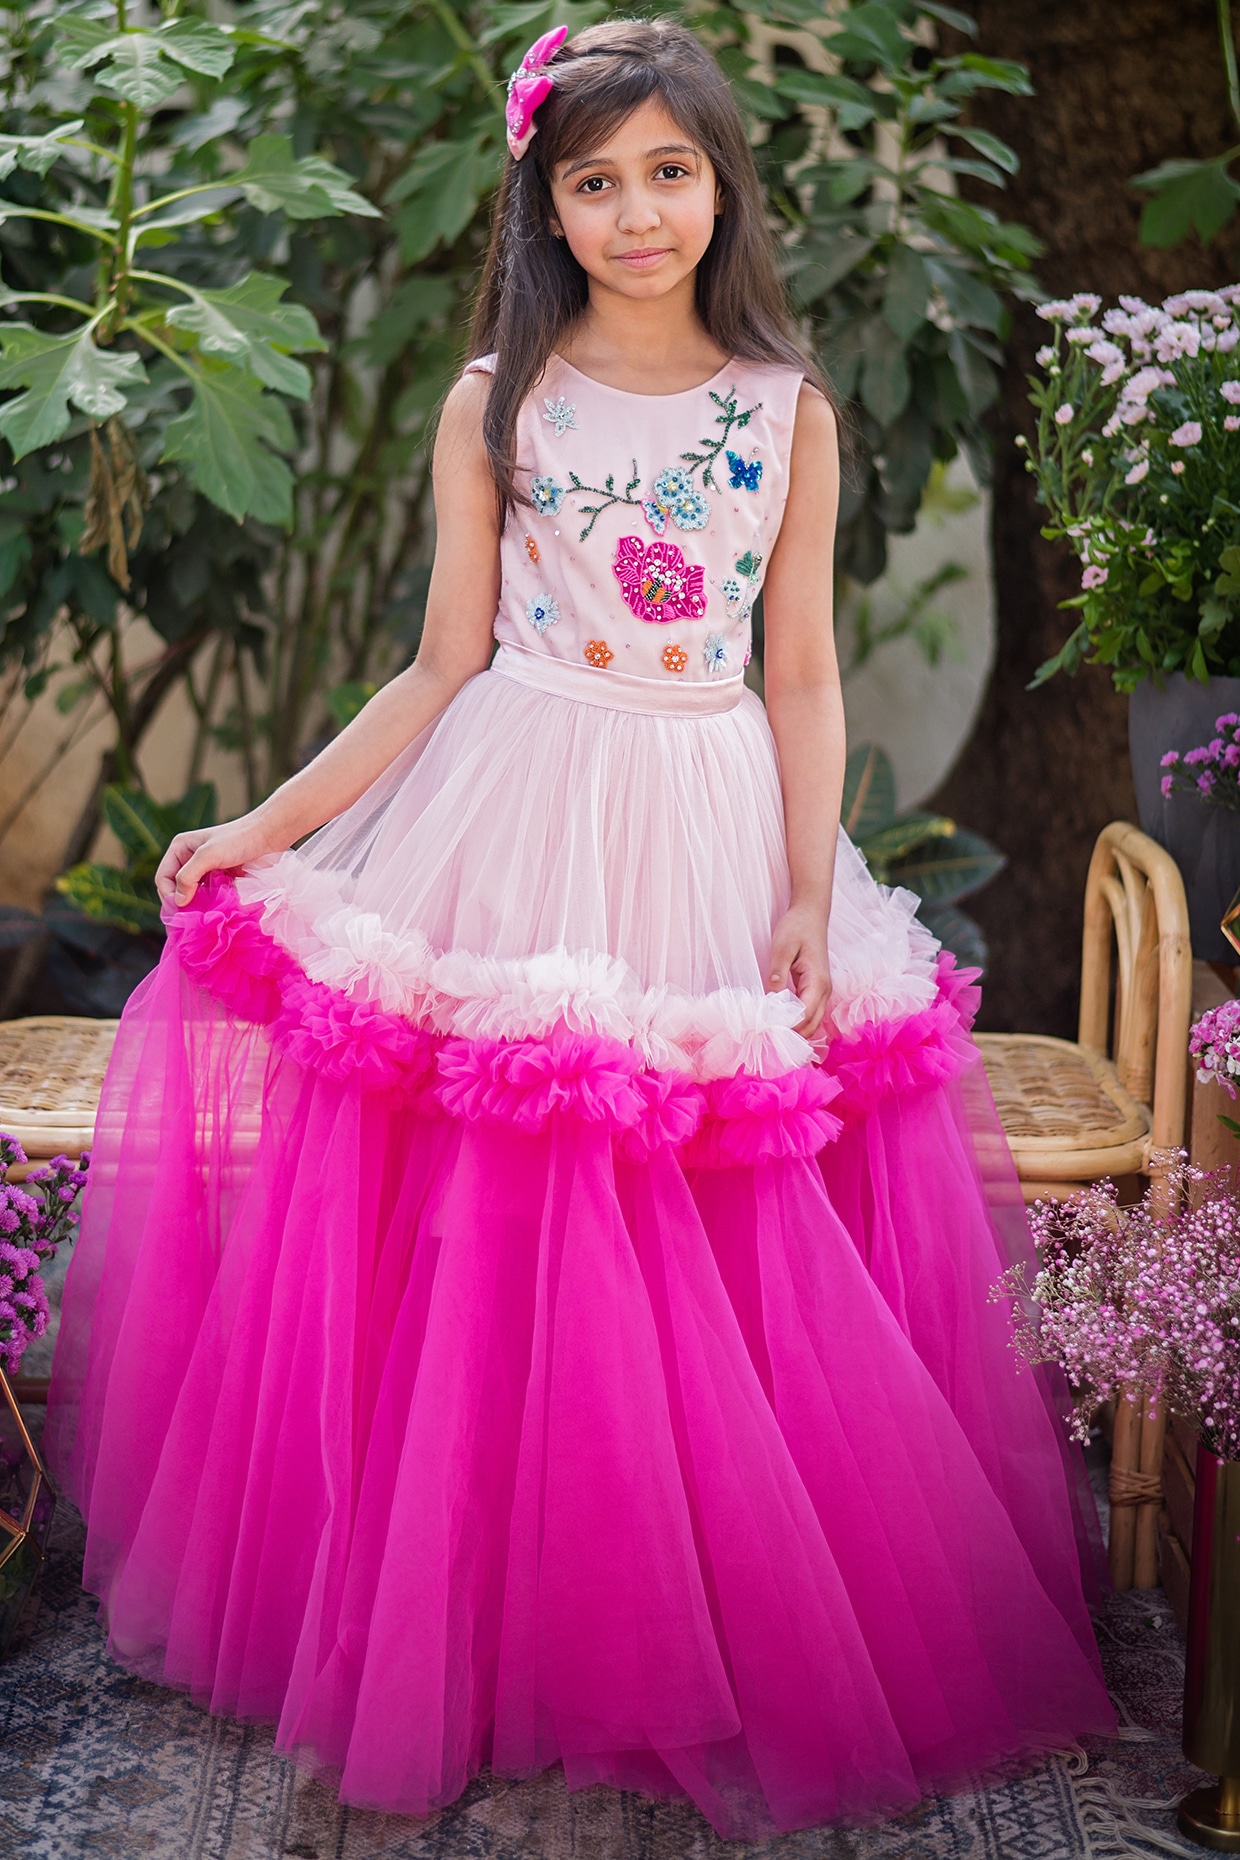 Blush Pink Wedding Gown – Panache Haute Couture